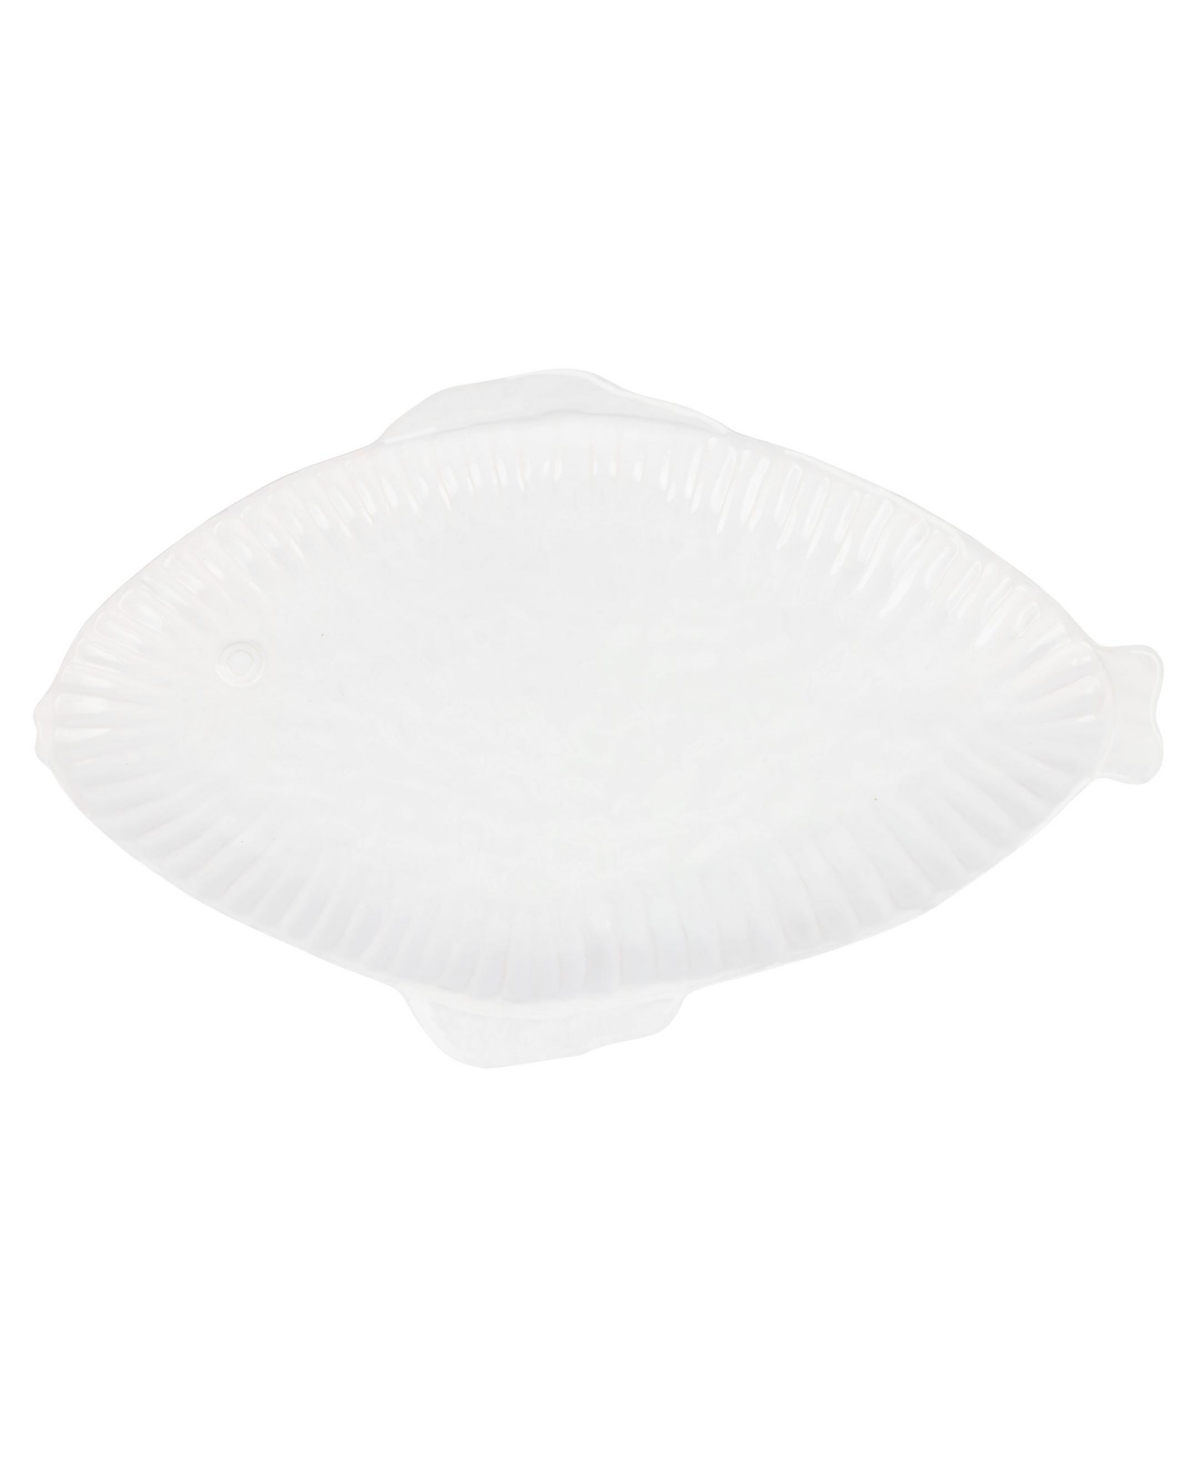 Vietri Pesce Serena Large Oval Platter In White